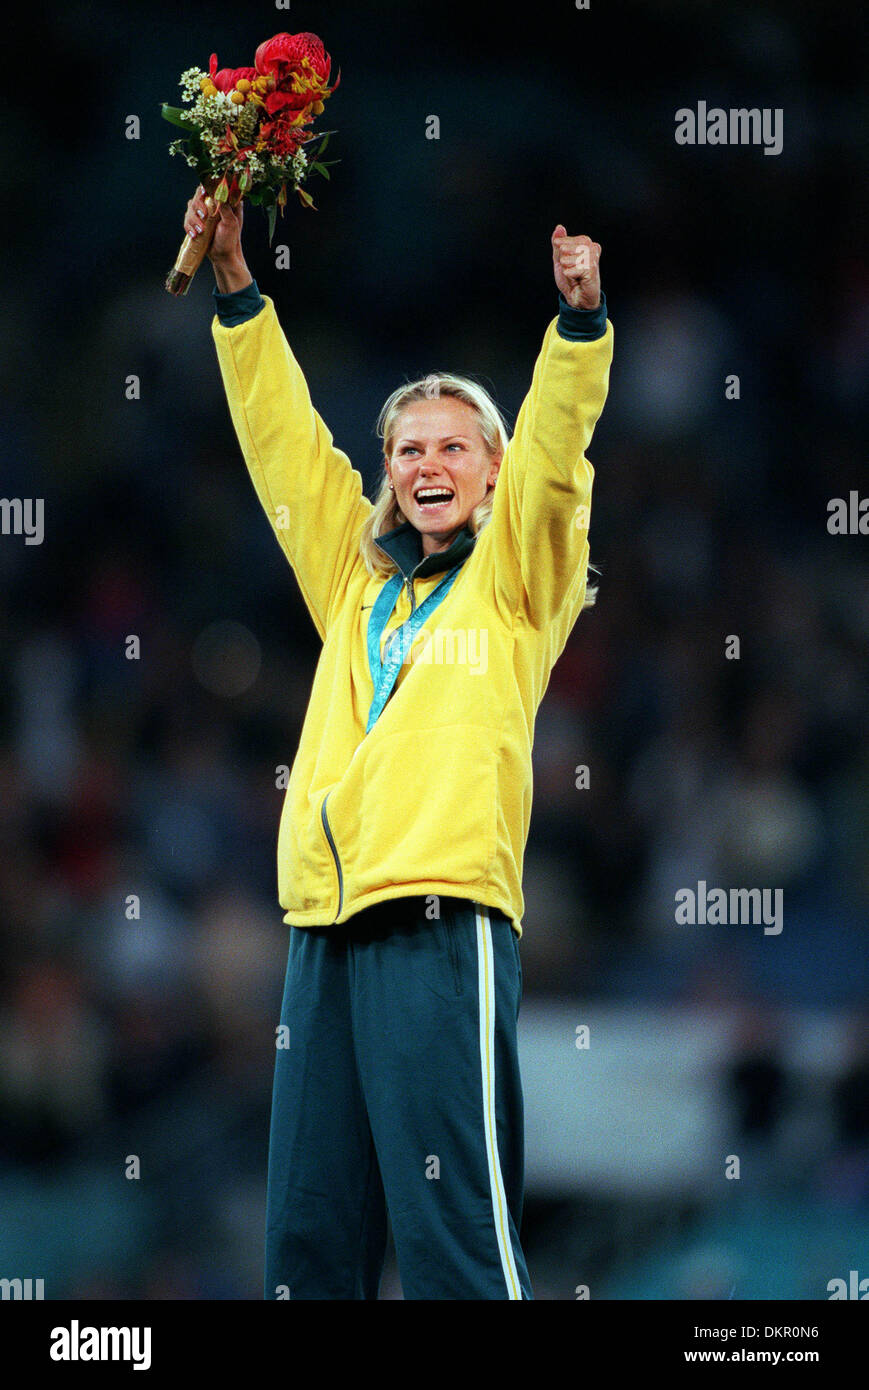 TATIANA GRIGORIEVA.POLE VAULT, SYDNEY OLYMPICS.Y, AUSTRALIA.OLYMPIC STADIUM, SYDNEY, SYDNE.22/09/2000.H21G10 Stock Photo